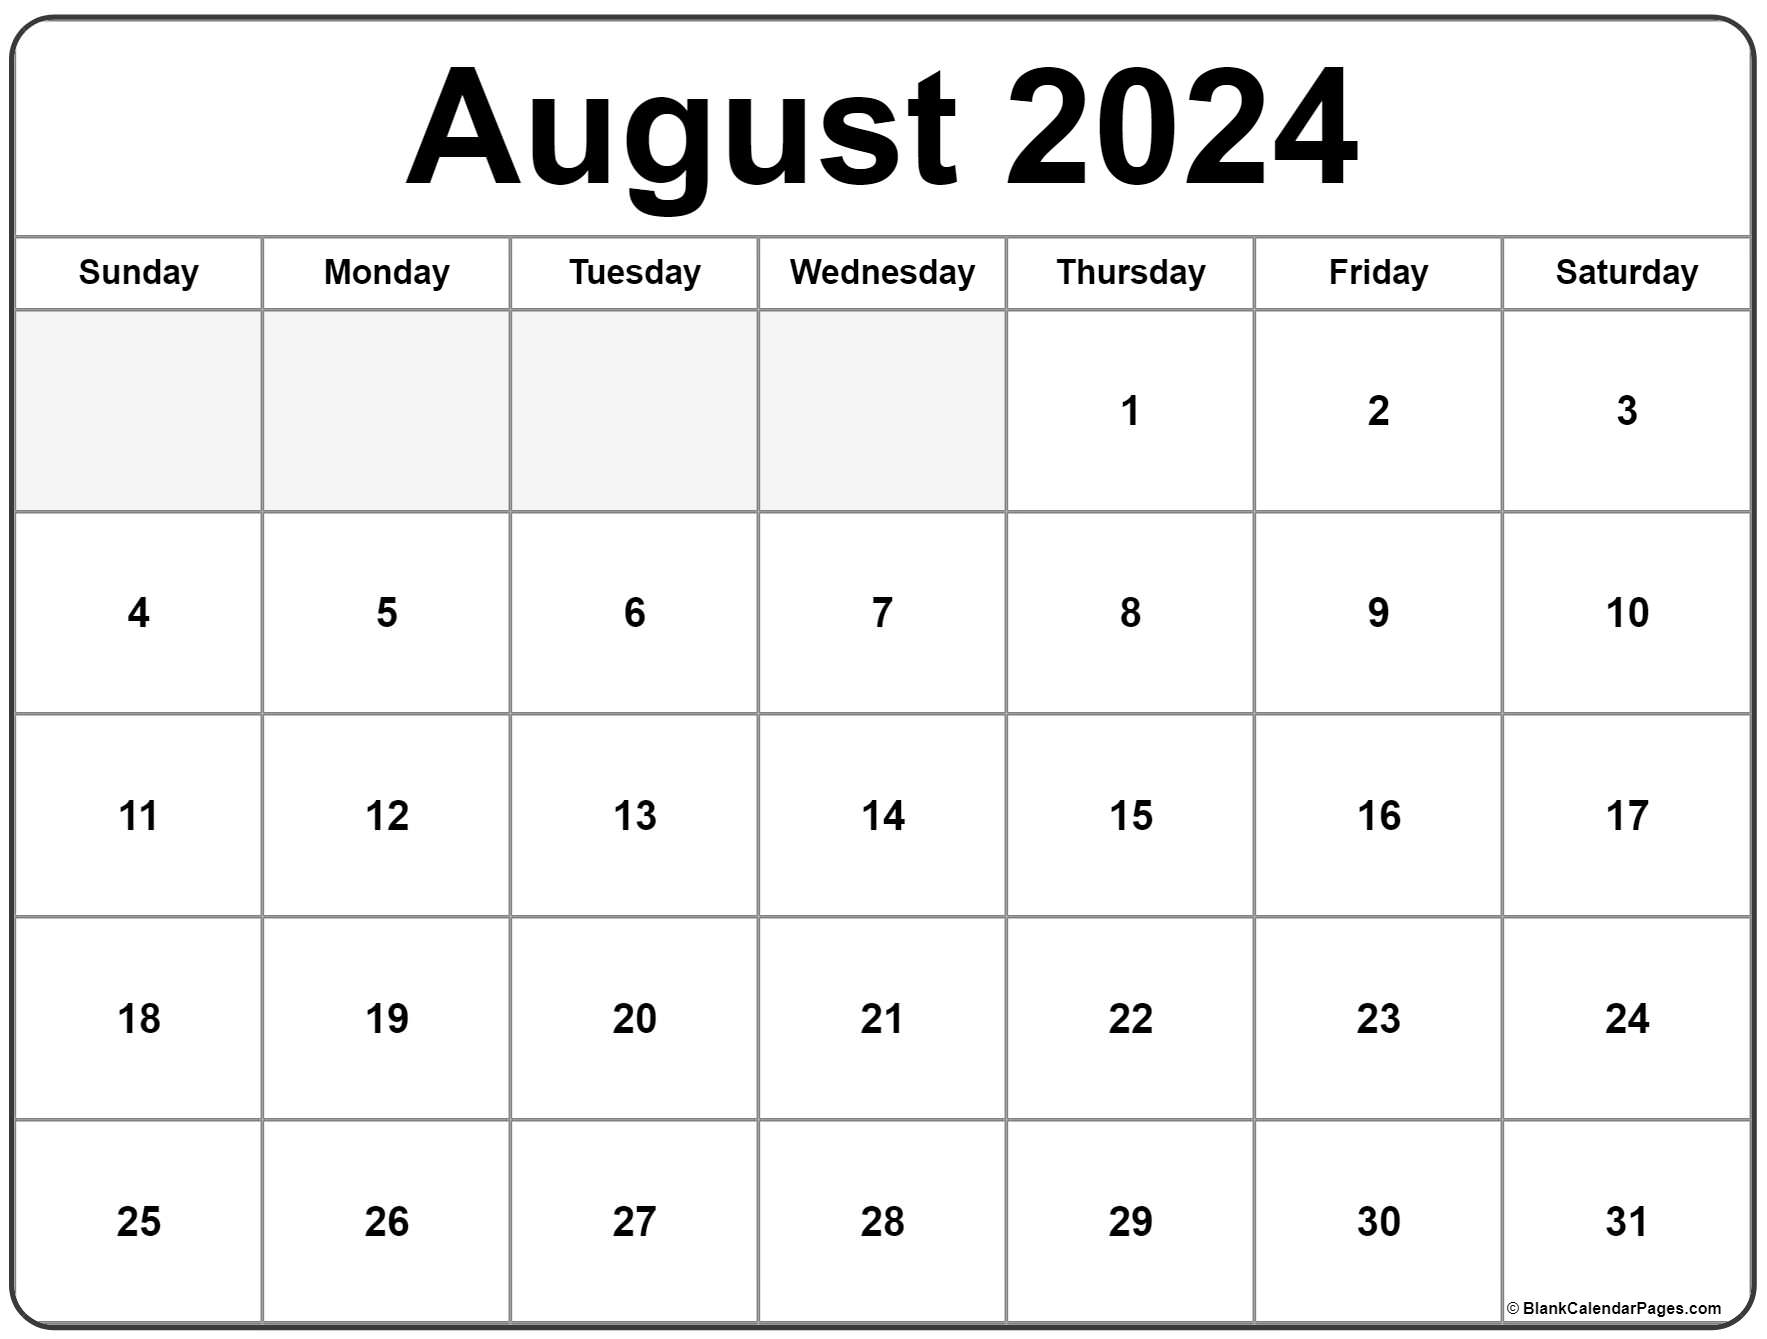 August 2024 calendar free printable calendar